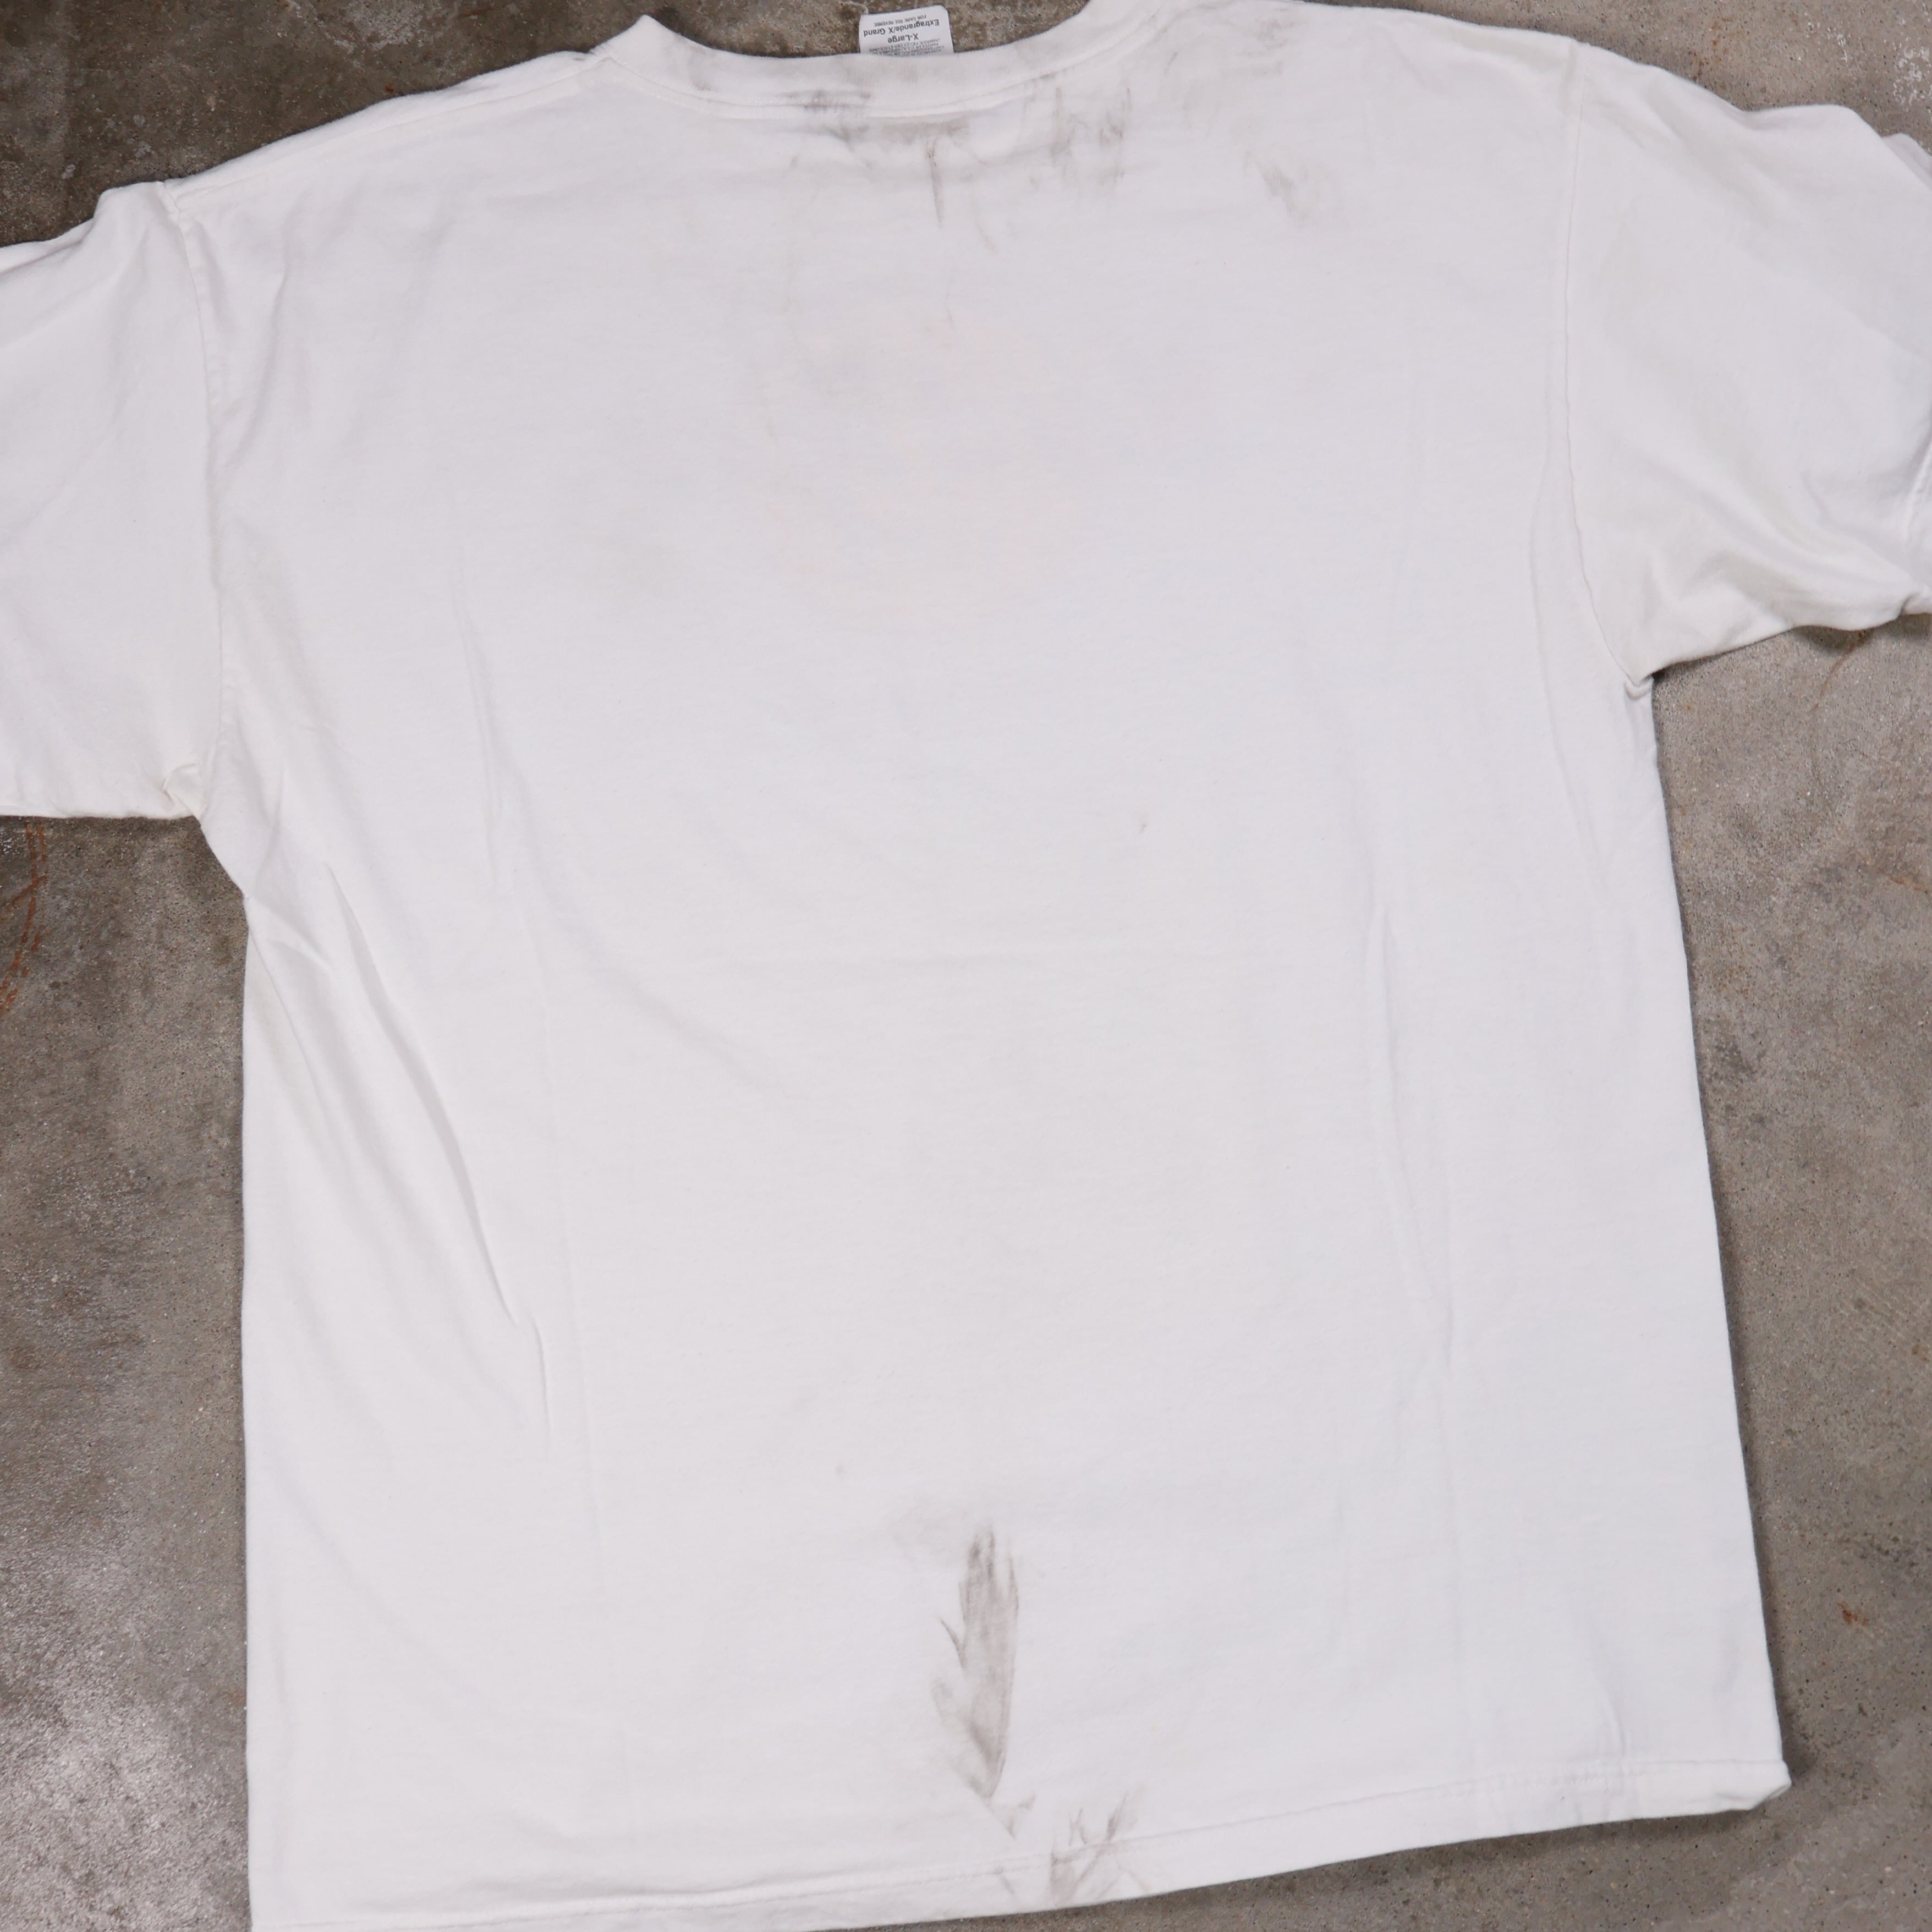 Hard Rock Cafe Phoenix T-Shirt 90s (XL)